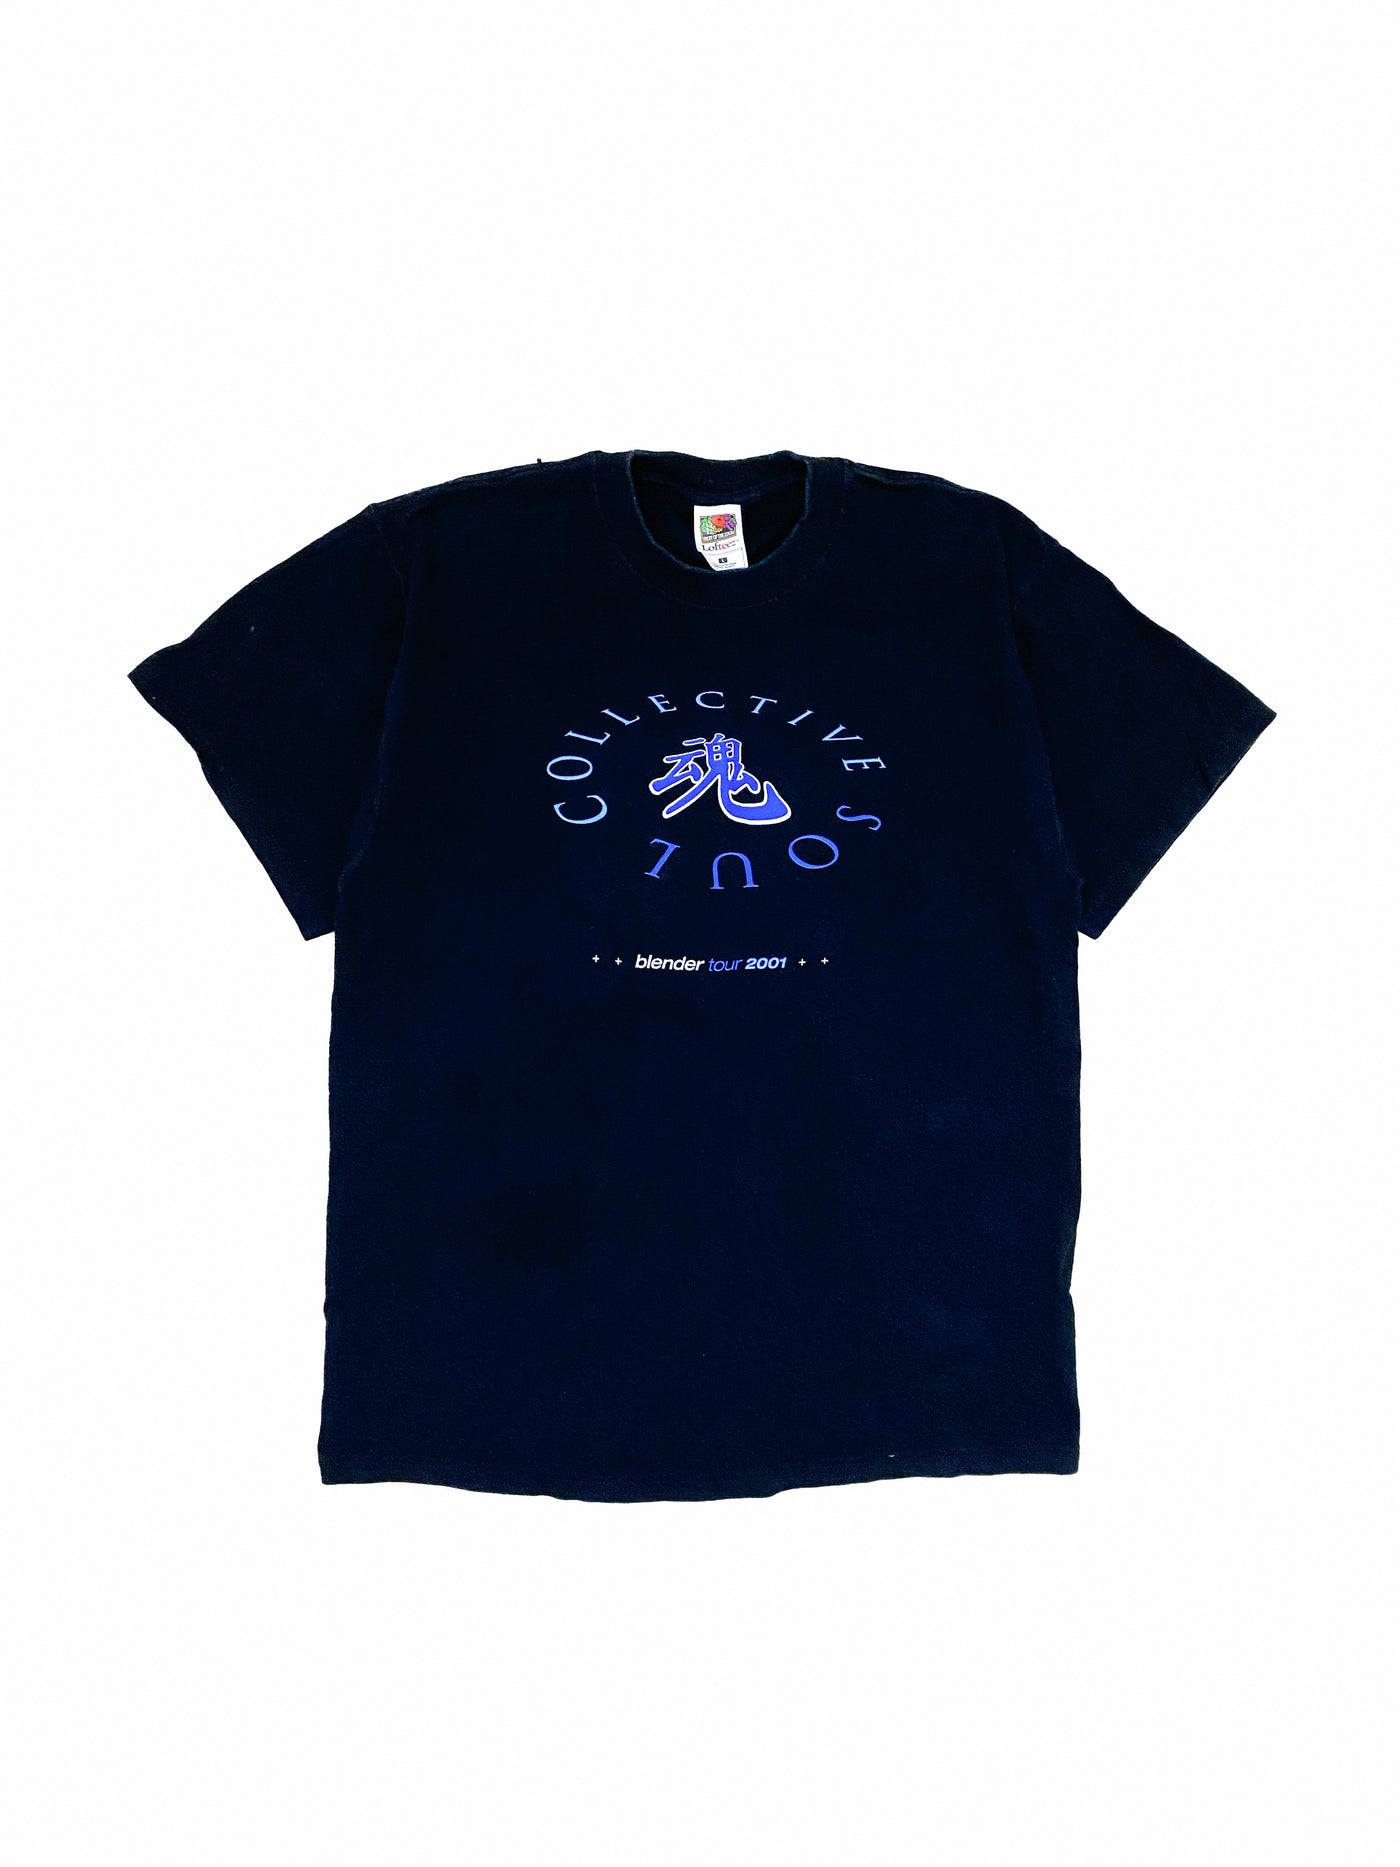 Vintage 2001 Collective Soul Blender Tour T-Shirt